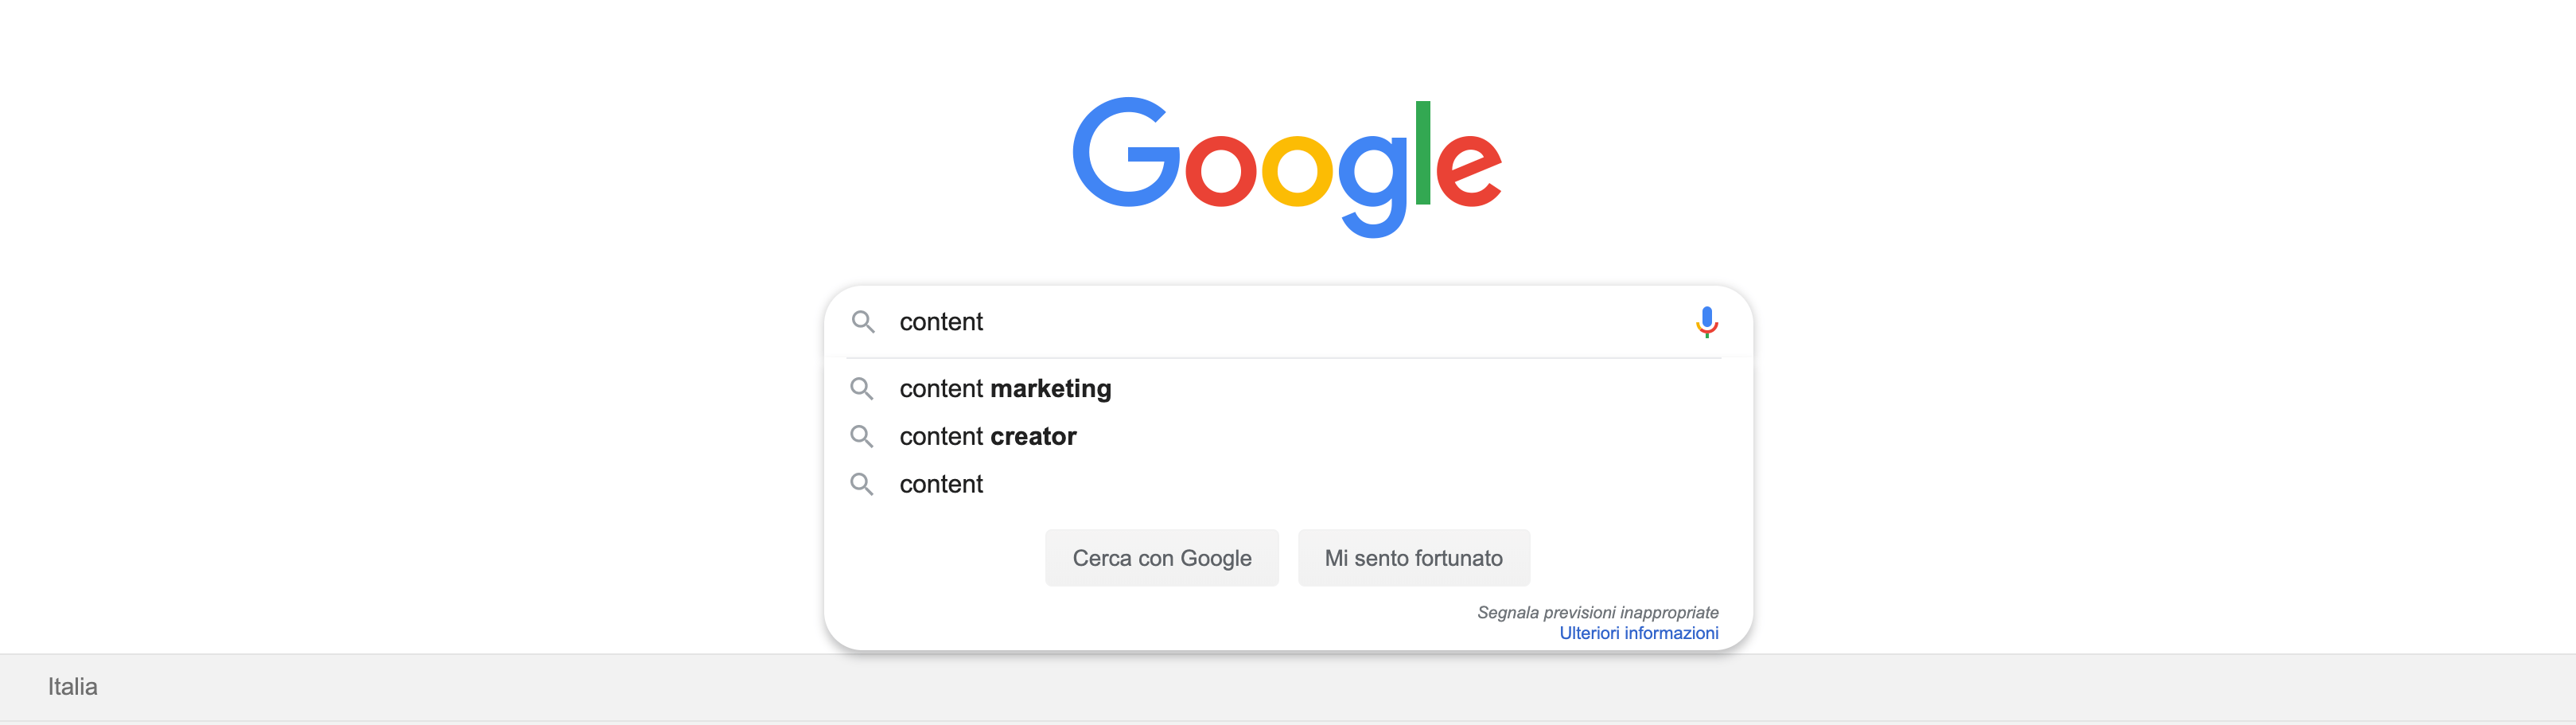 googlesuggest